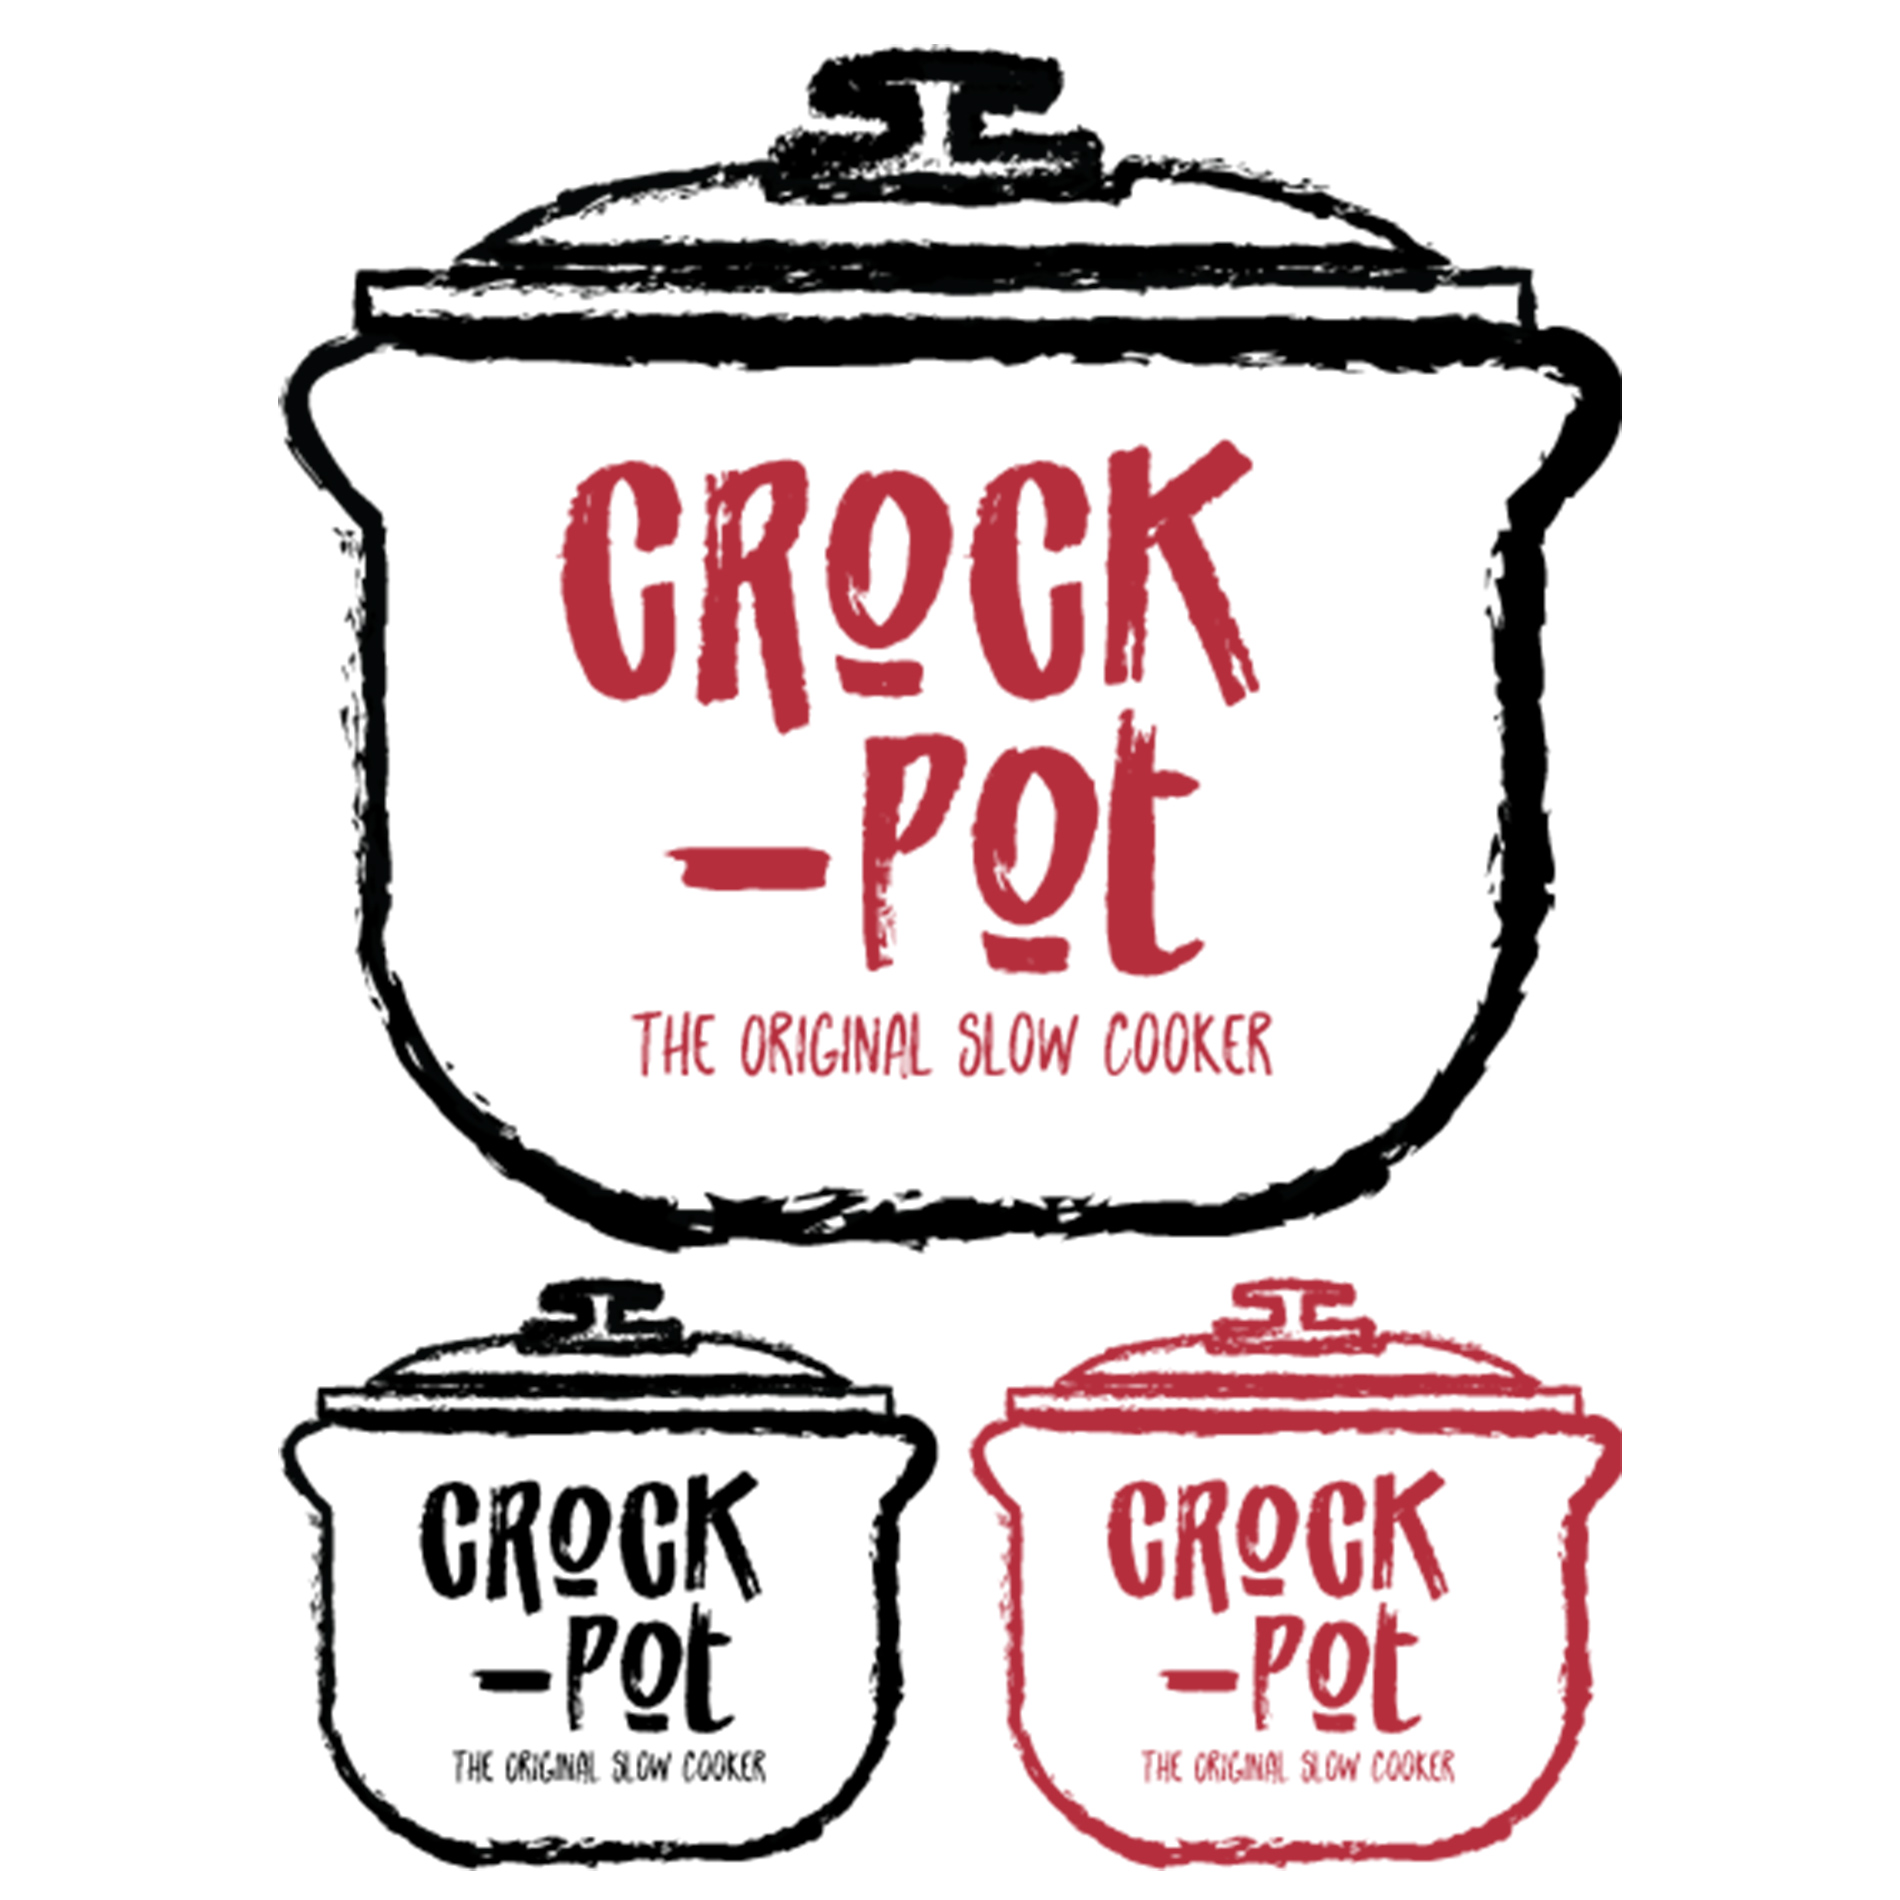 Three Crock-pot logo designs